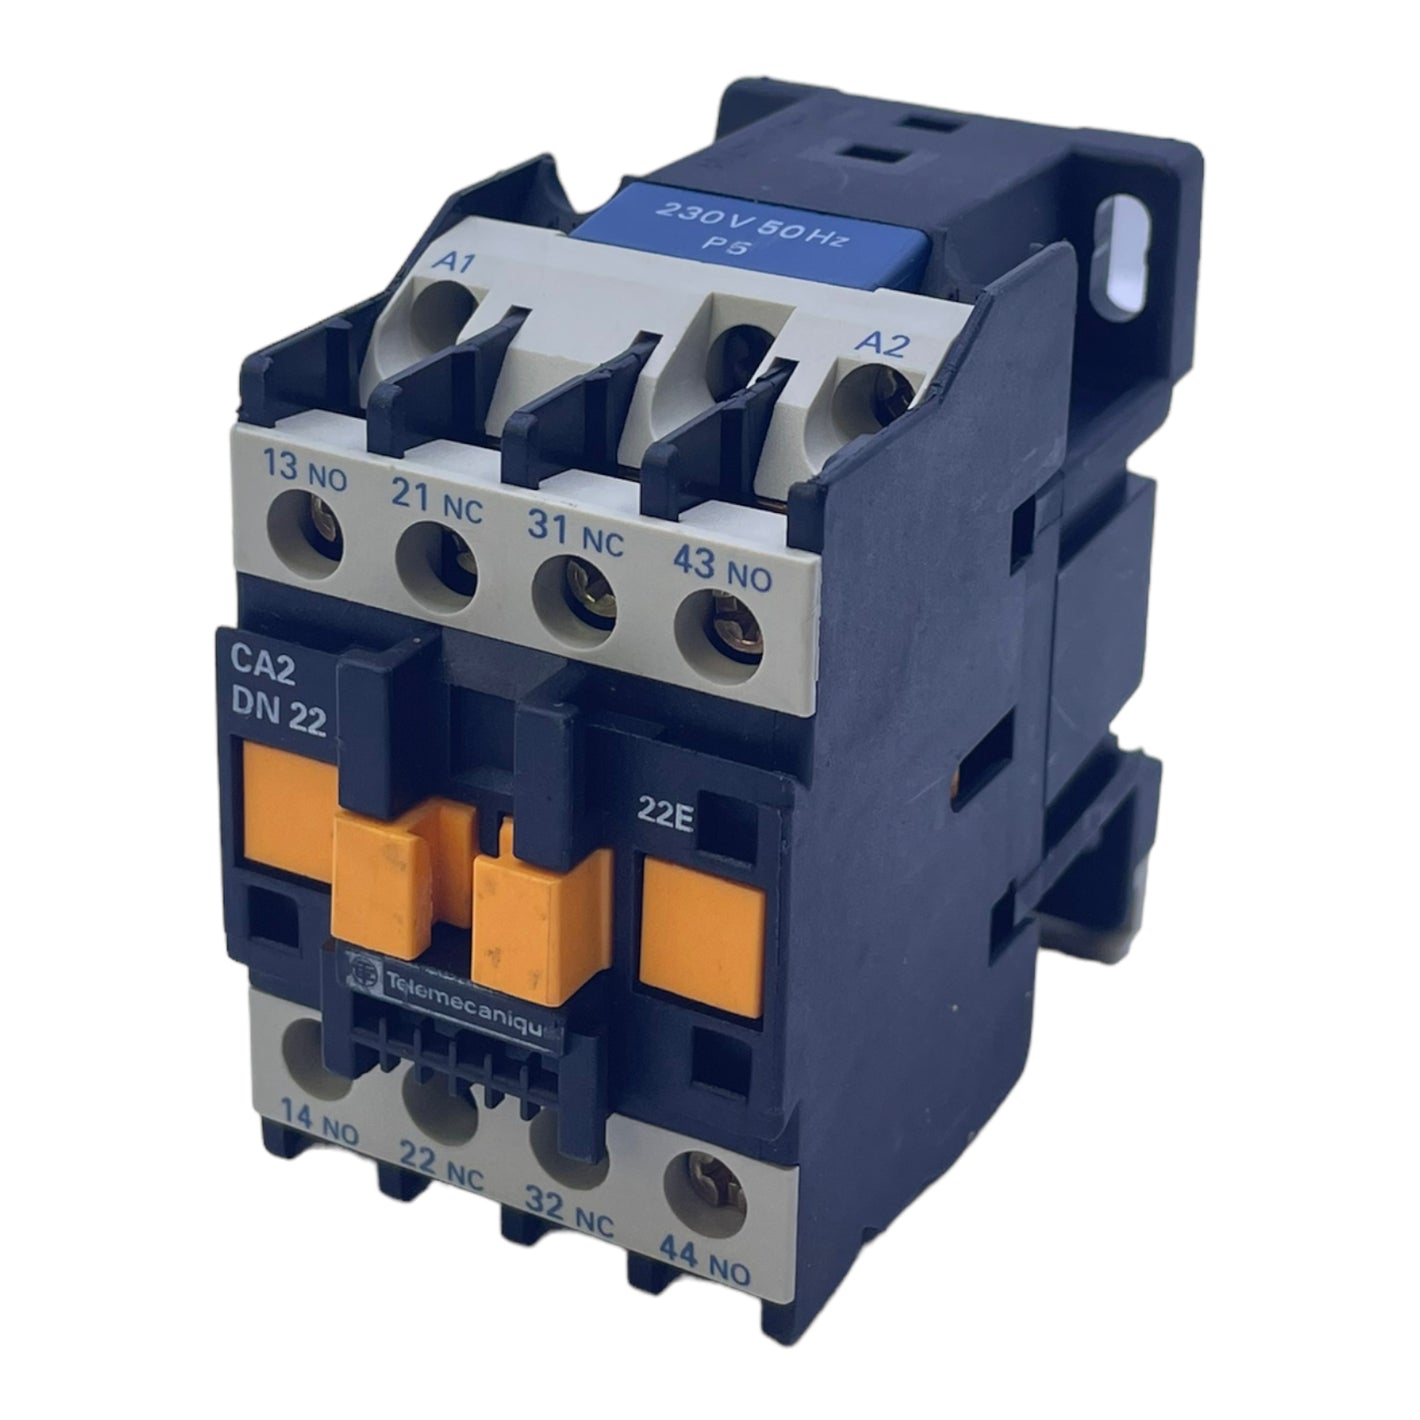 Telemecanique CA2DN22 power contactor 230V at 50Hz power contactor 